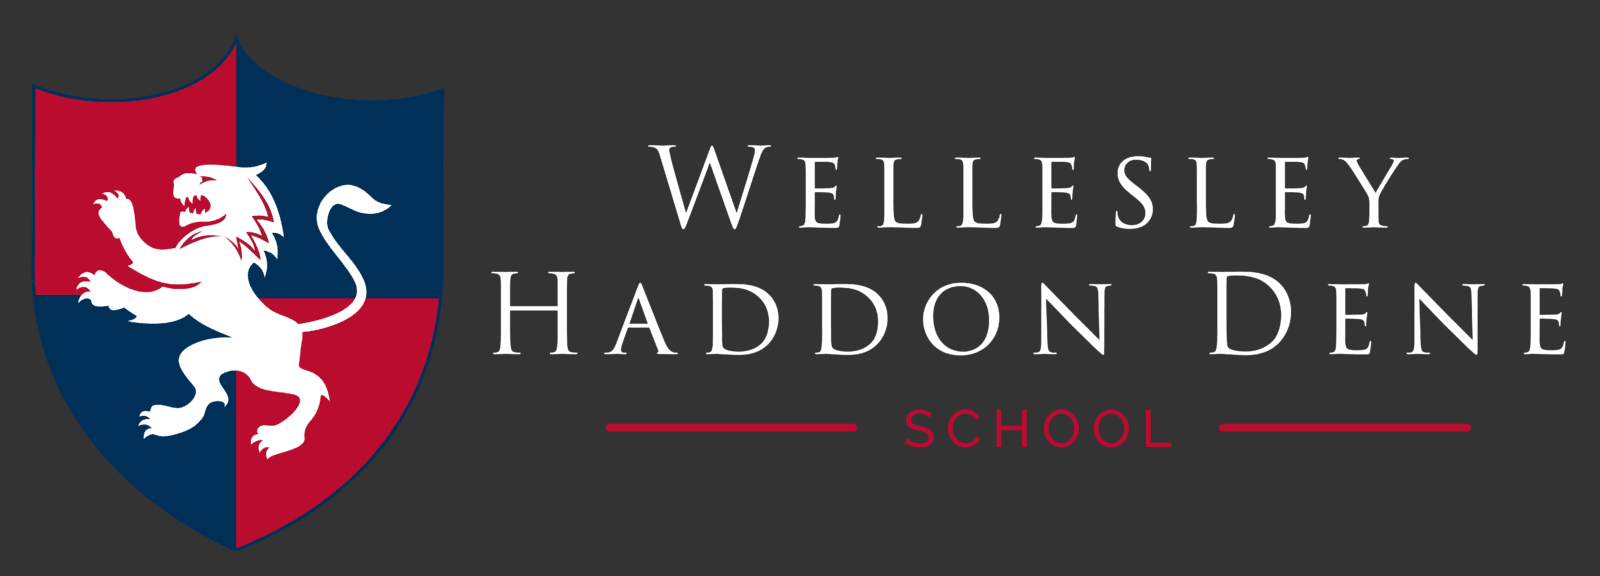 Wellesley Haddon Dene Preparatory School - Logo